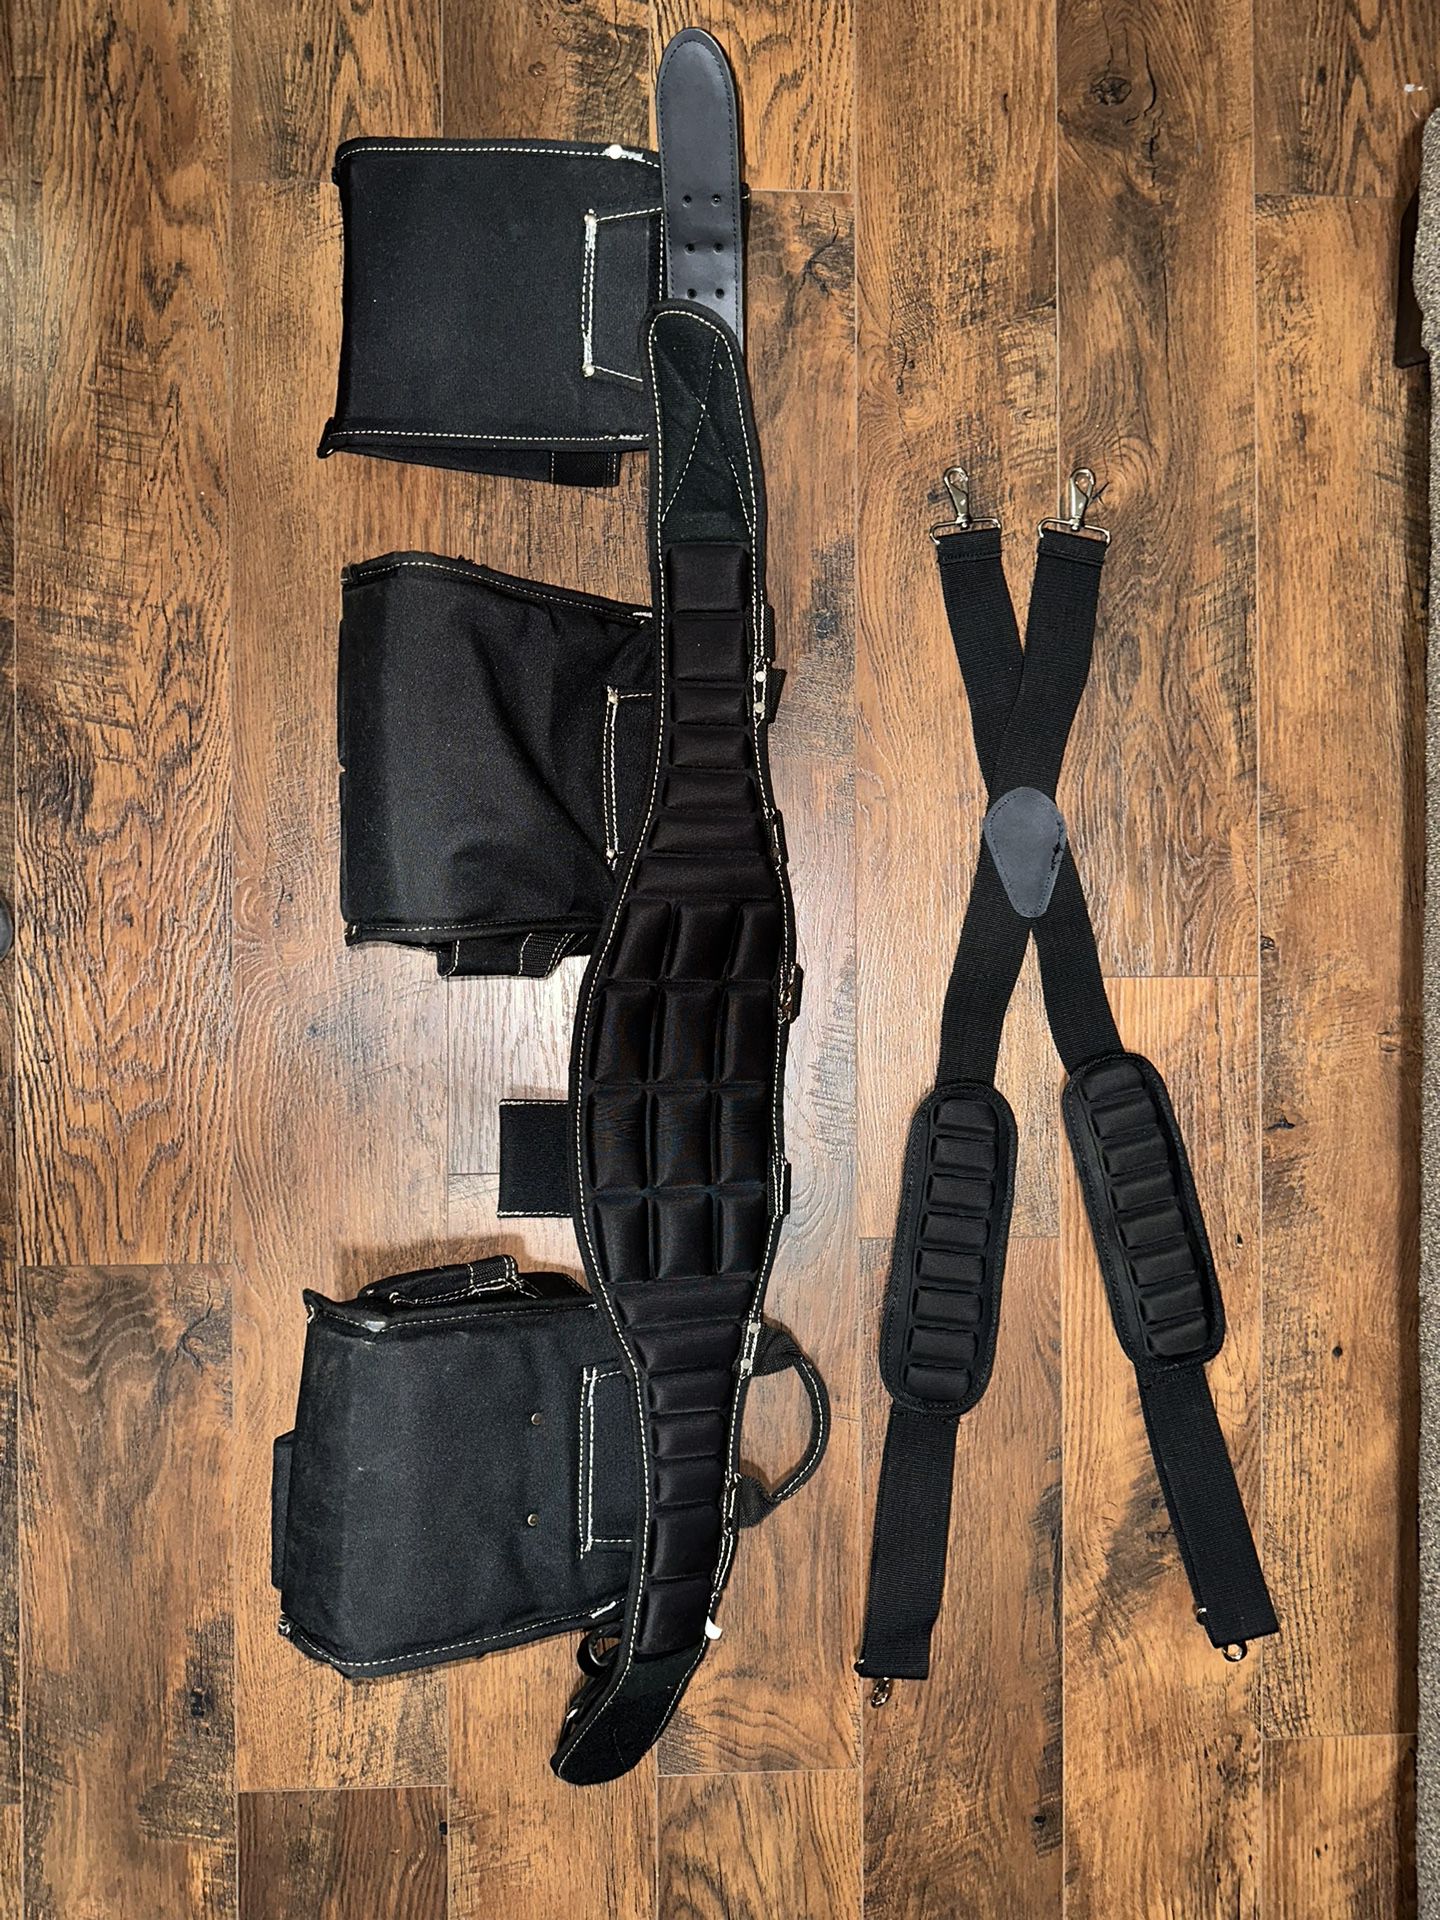 Tool Belt / Gatorback B145 Carpenters Triple Combo  / Gatorback B606 Suspenders